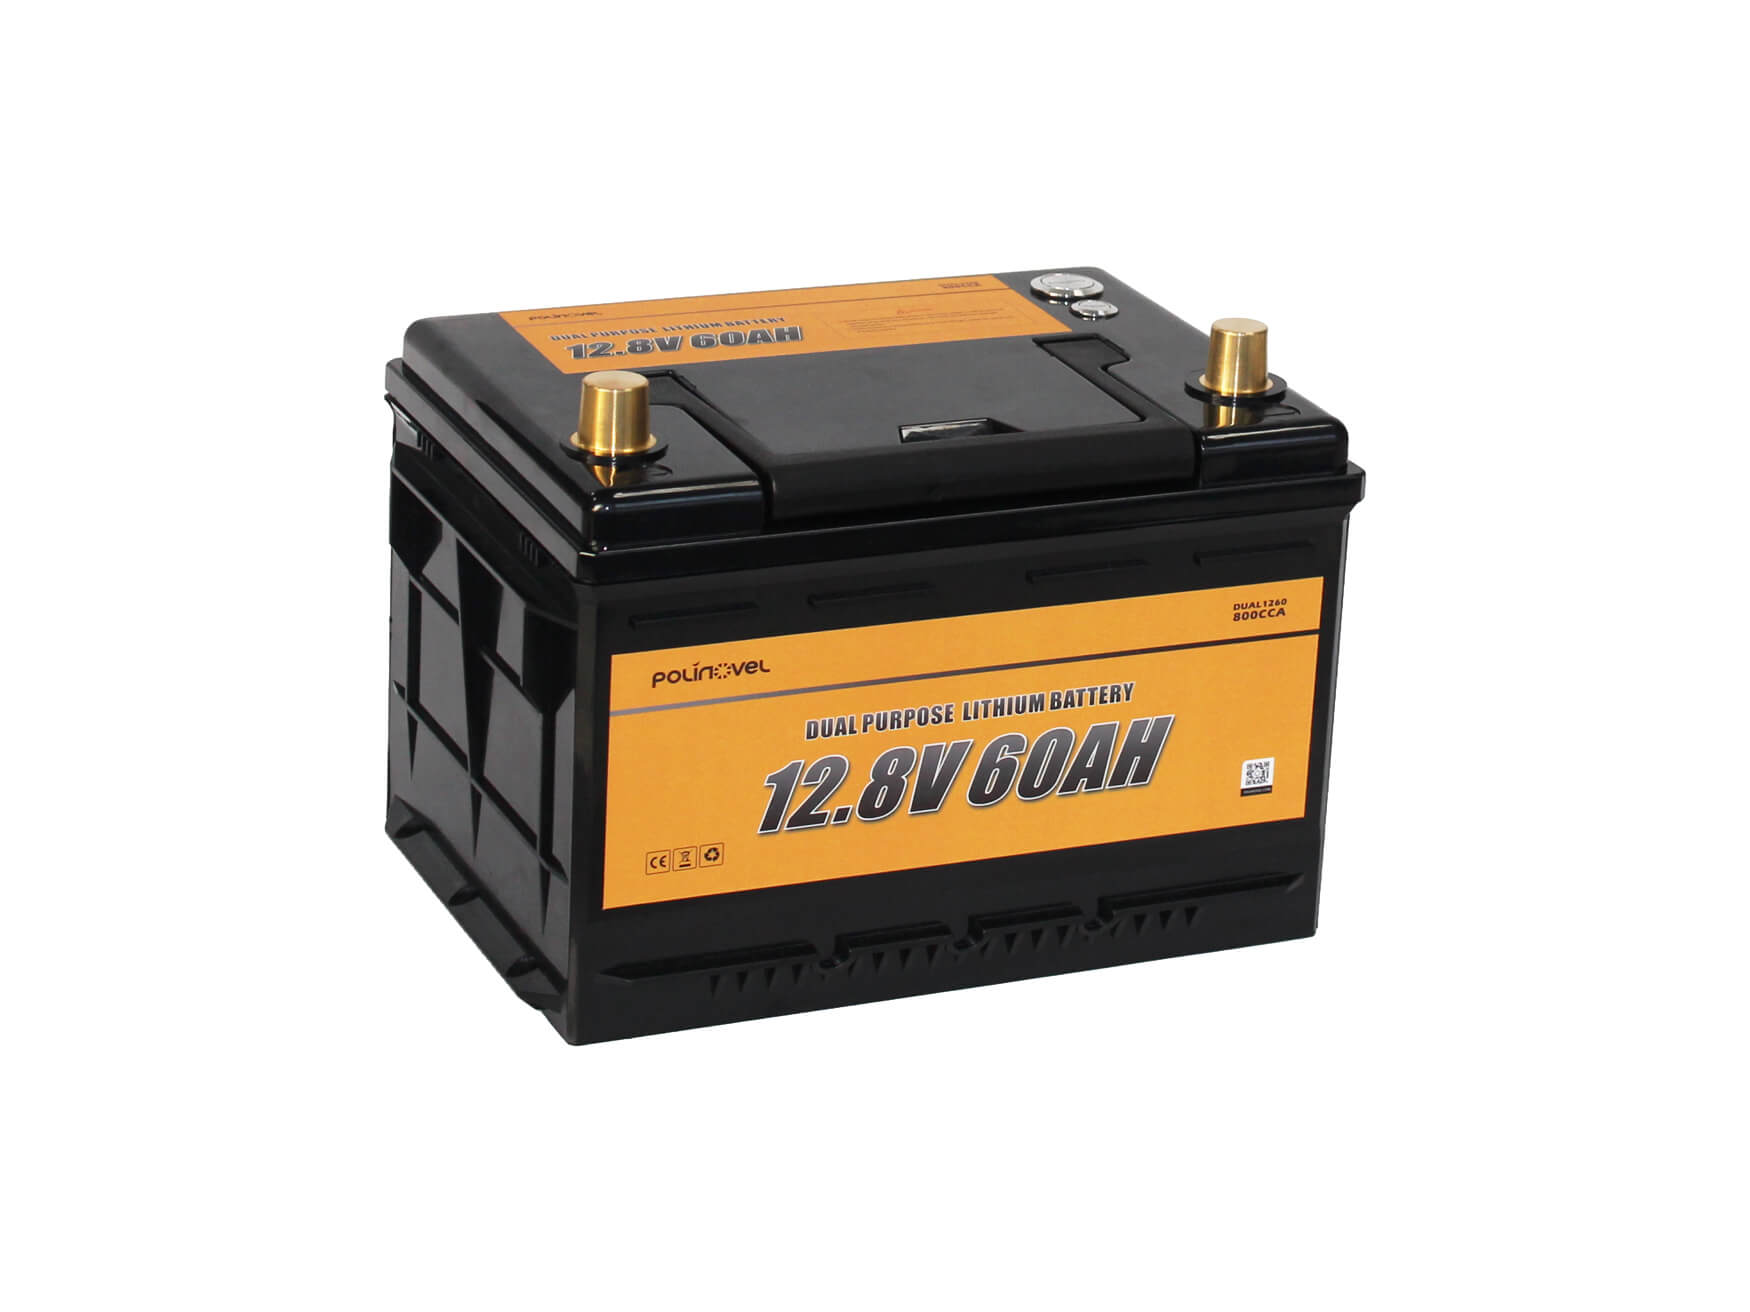 Polinovel 12V 60Ah Dual Purpose Lithium Battery